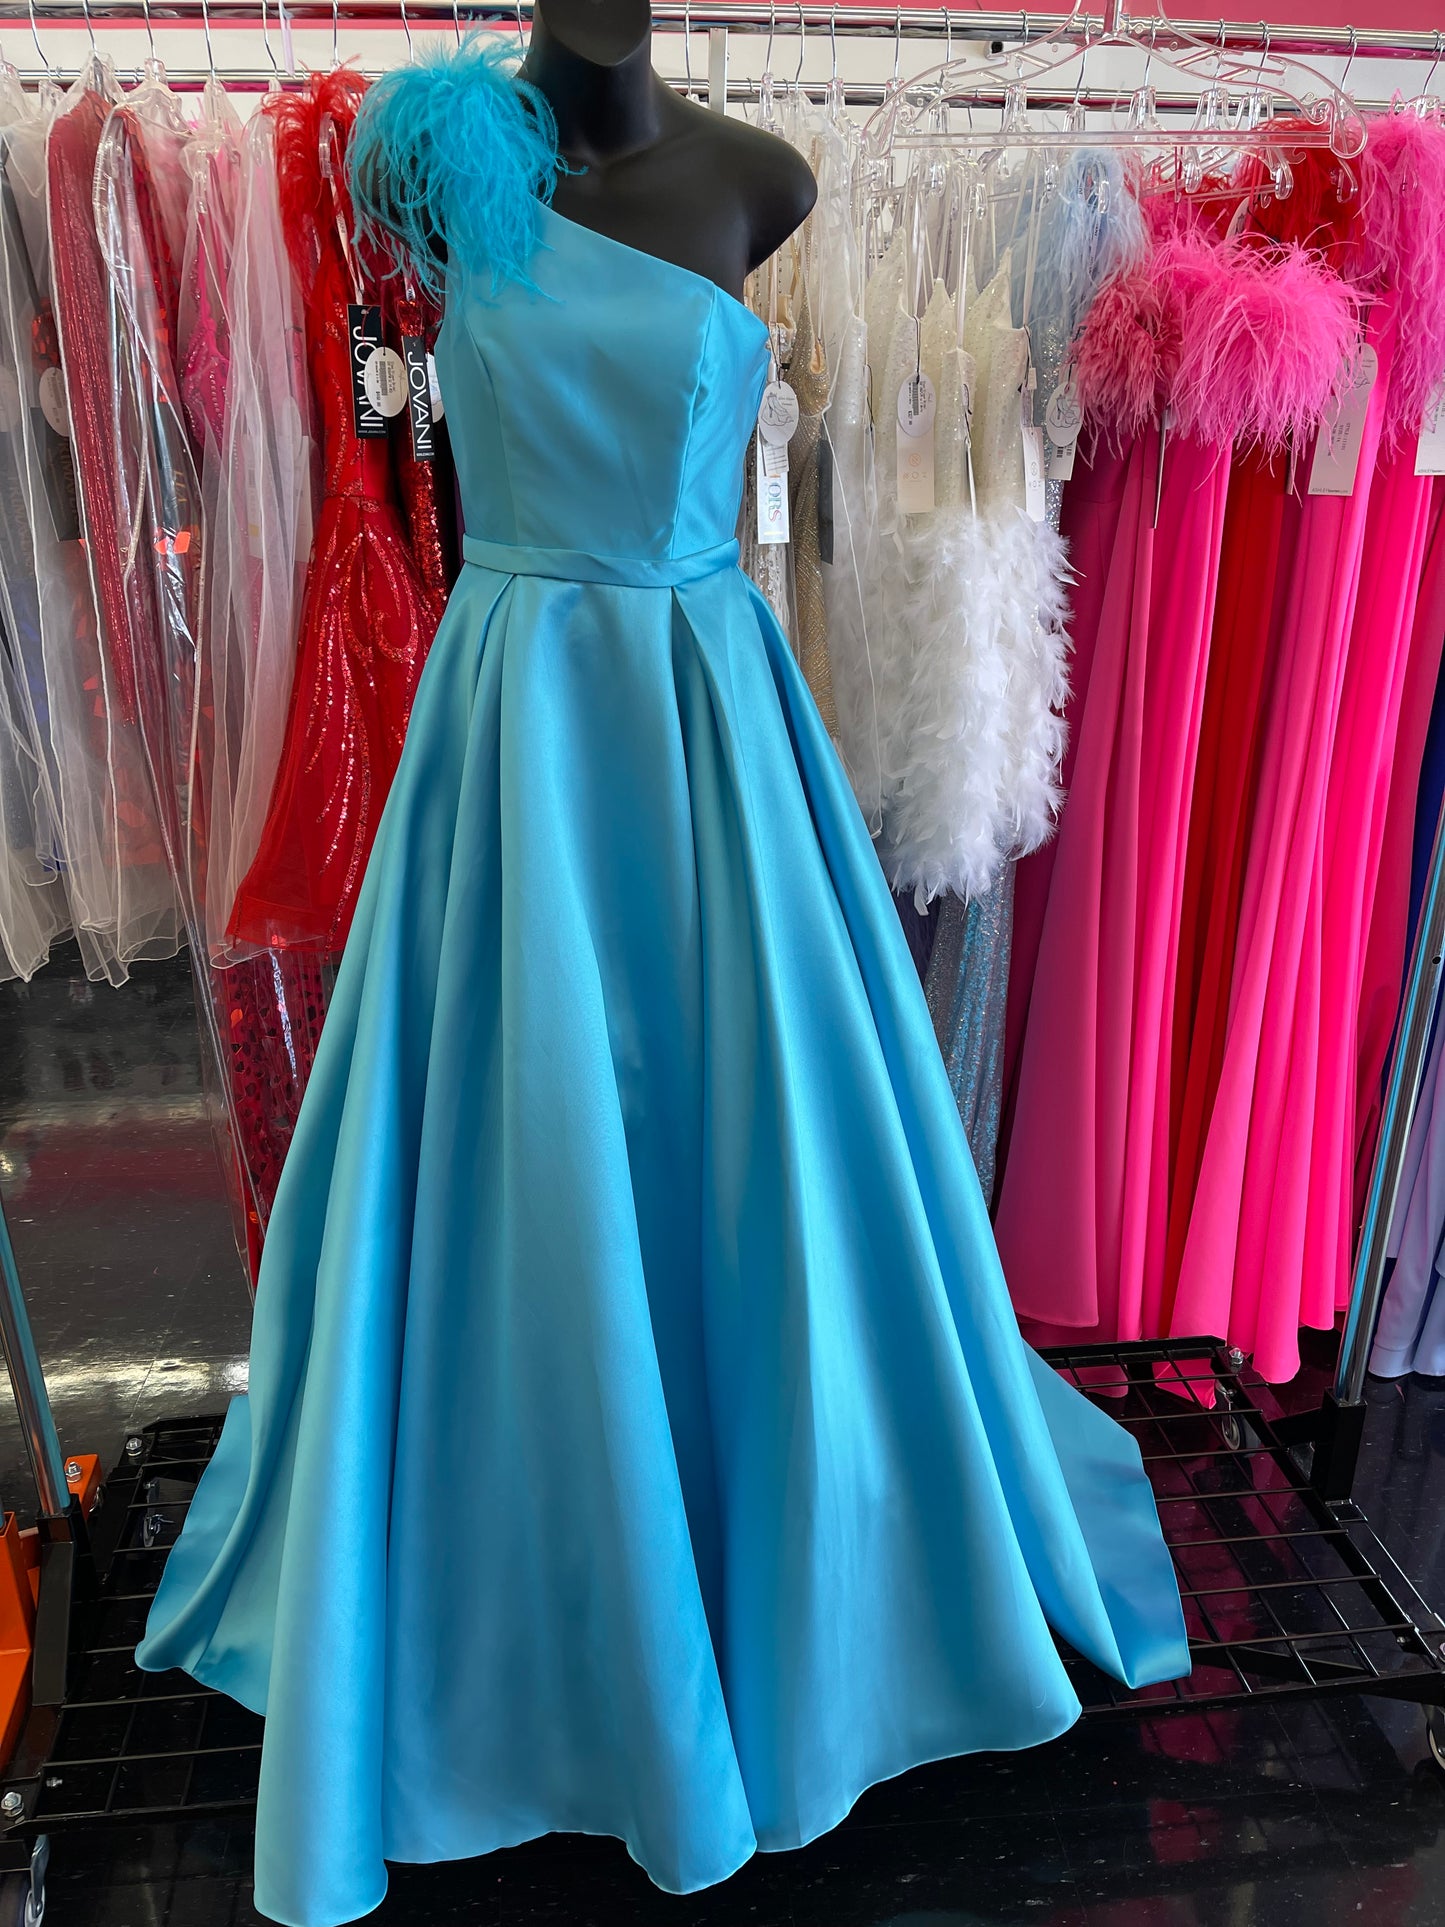 Ashley Lauren 11336 size 0 Turquoise One shoulder Prom Dress A line Feather Trim Shoulder Ballgown